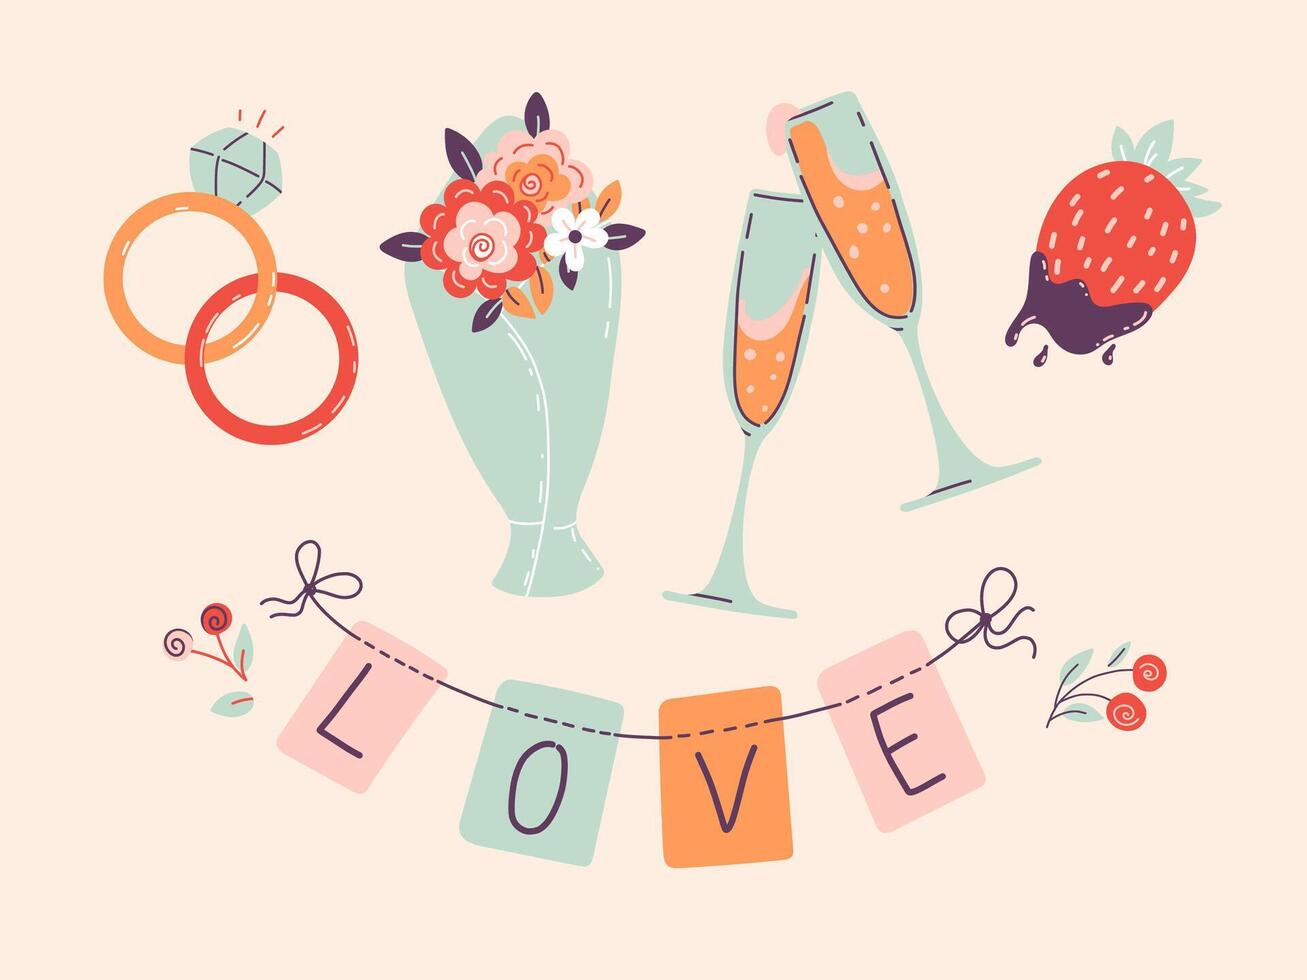 san valentin día tarjeta. champán anteojos, floral ramo, fresas y Boda anillos plano estilo. dibujos animados vector ilustración